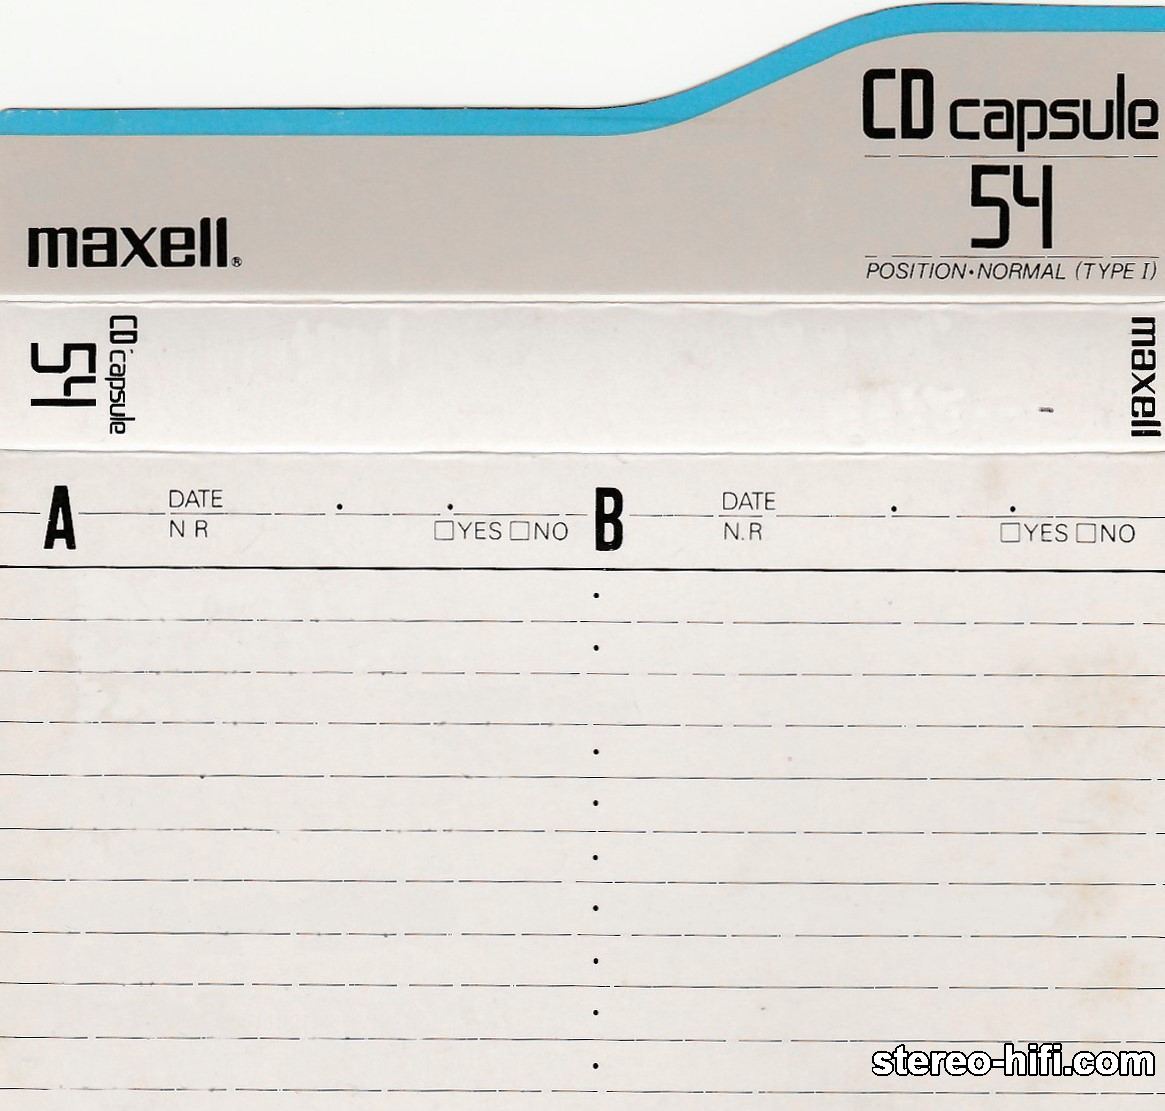 Maxell CD Capsule C54 - 1990-91